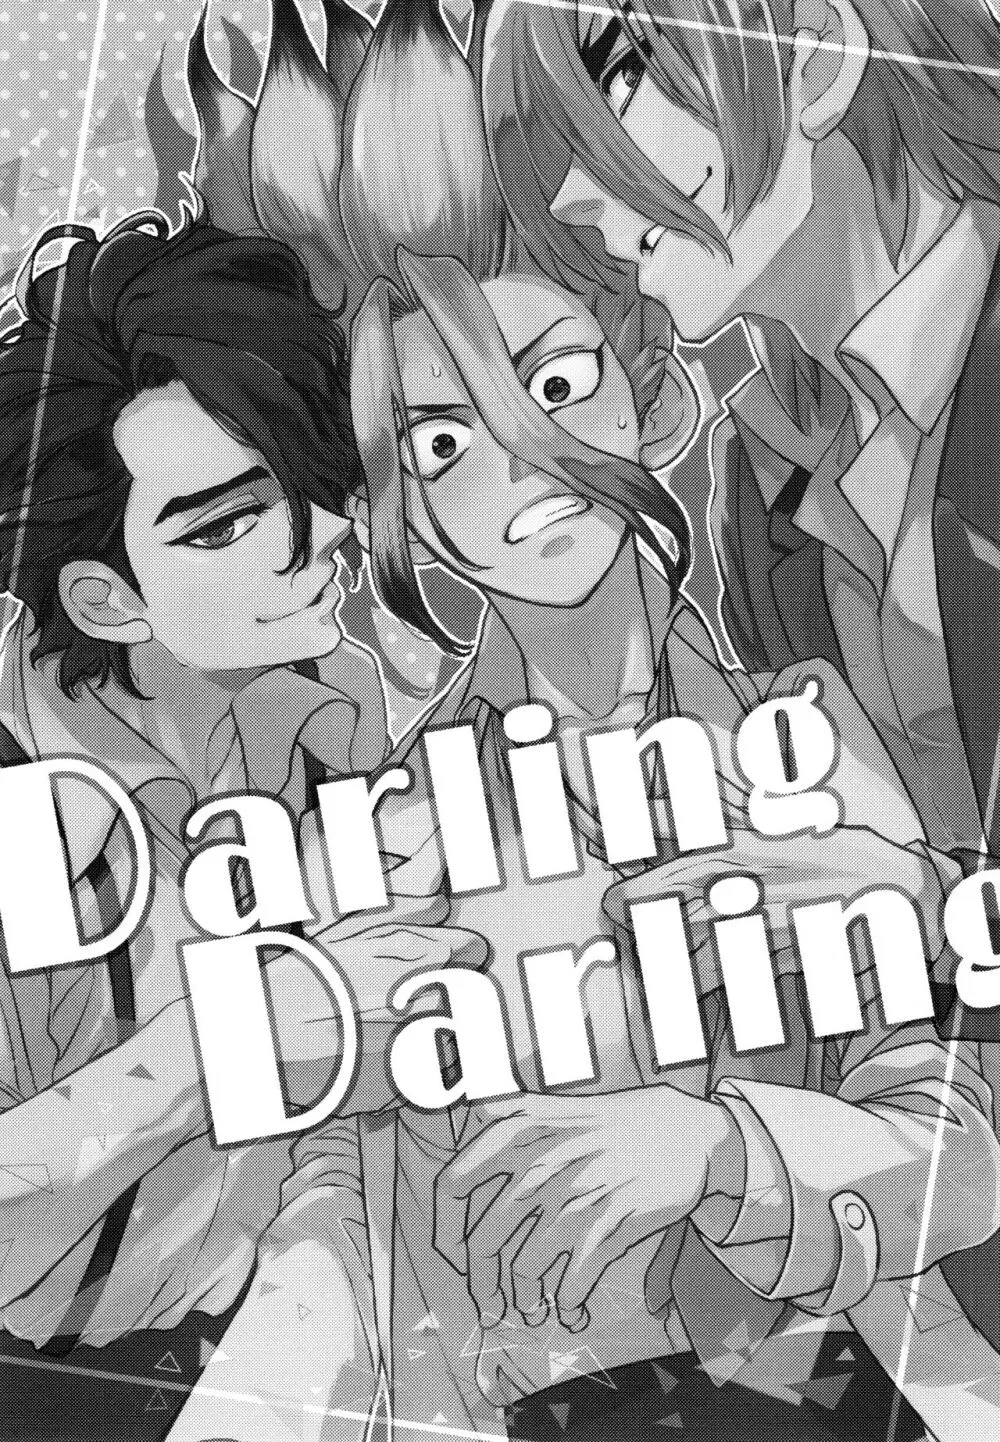 Darling Darling - page3